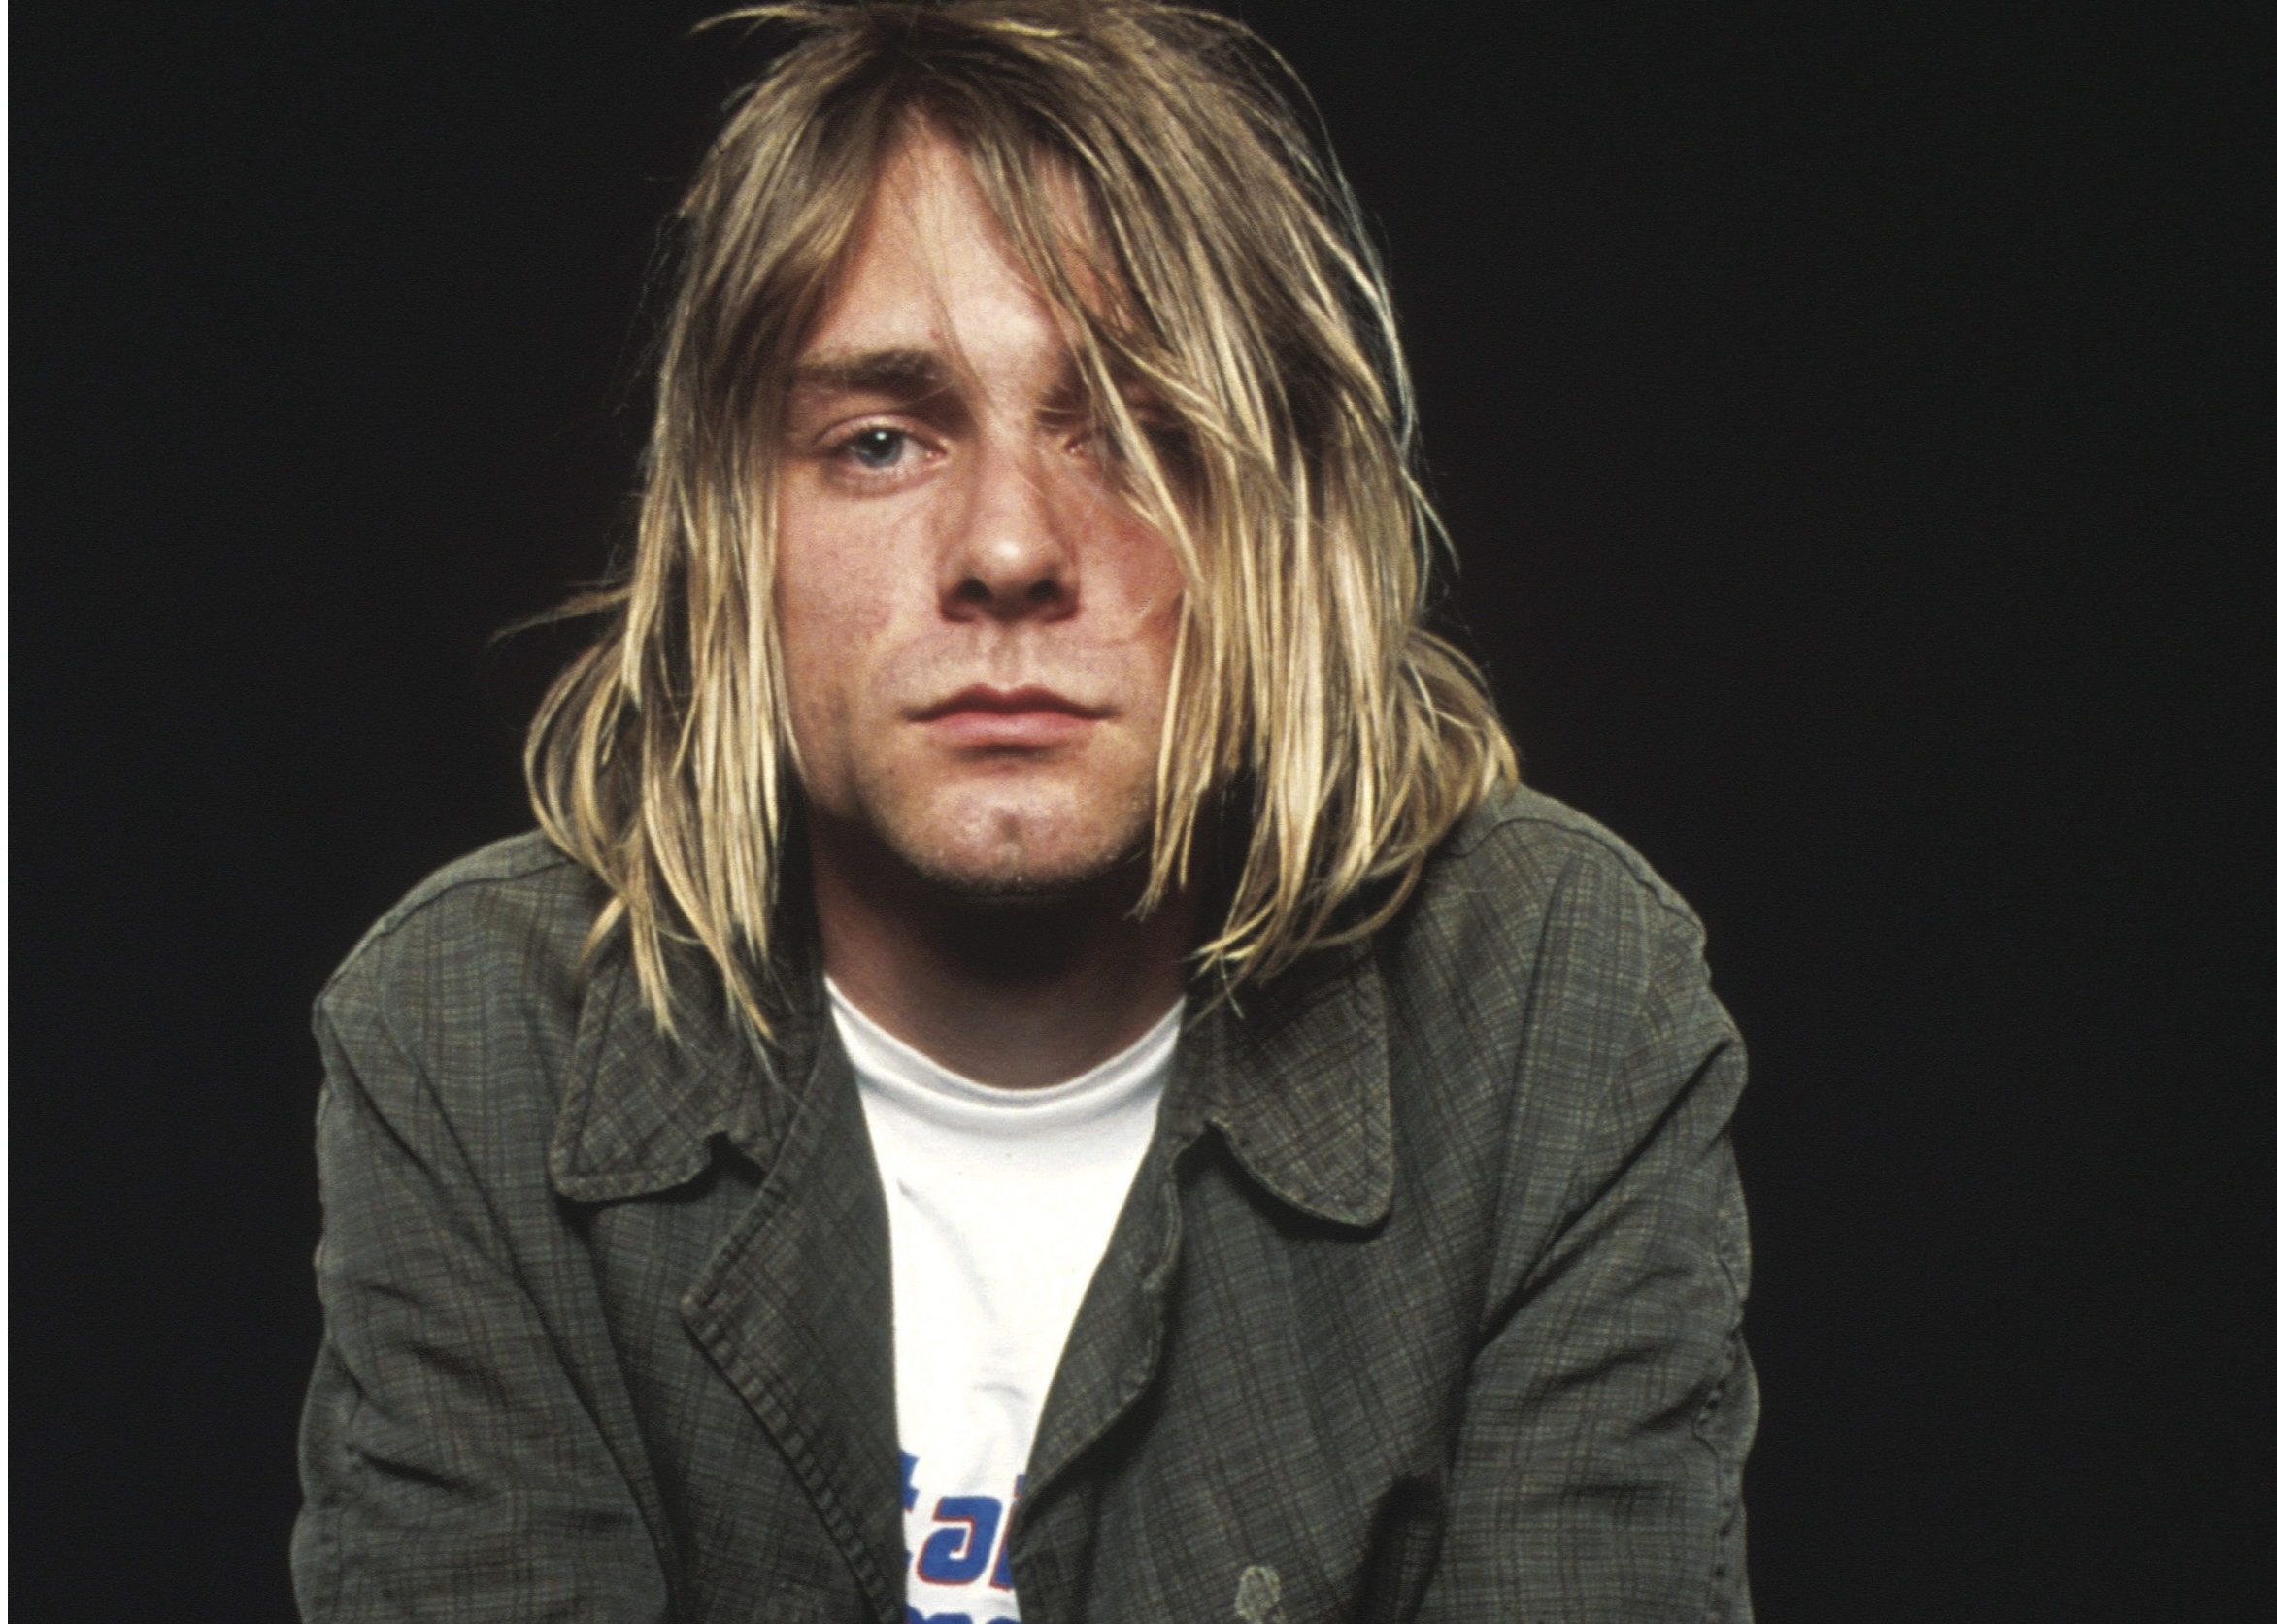 Álbum de música inédita de Kurt Cobain saldrá en noviembre